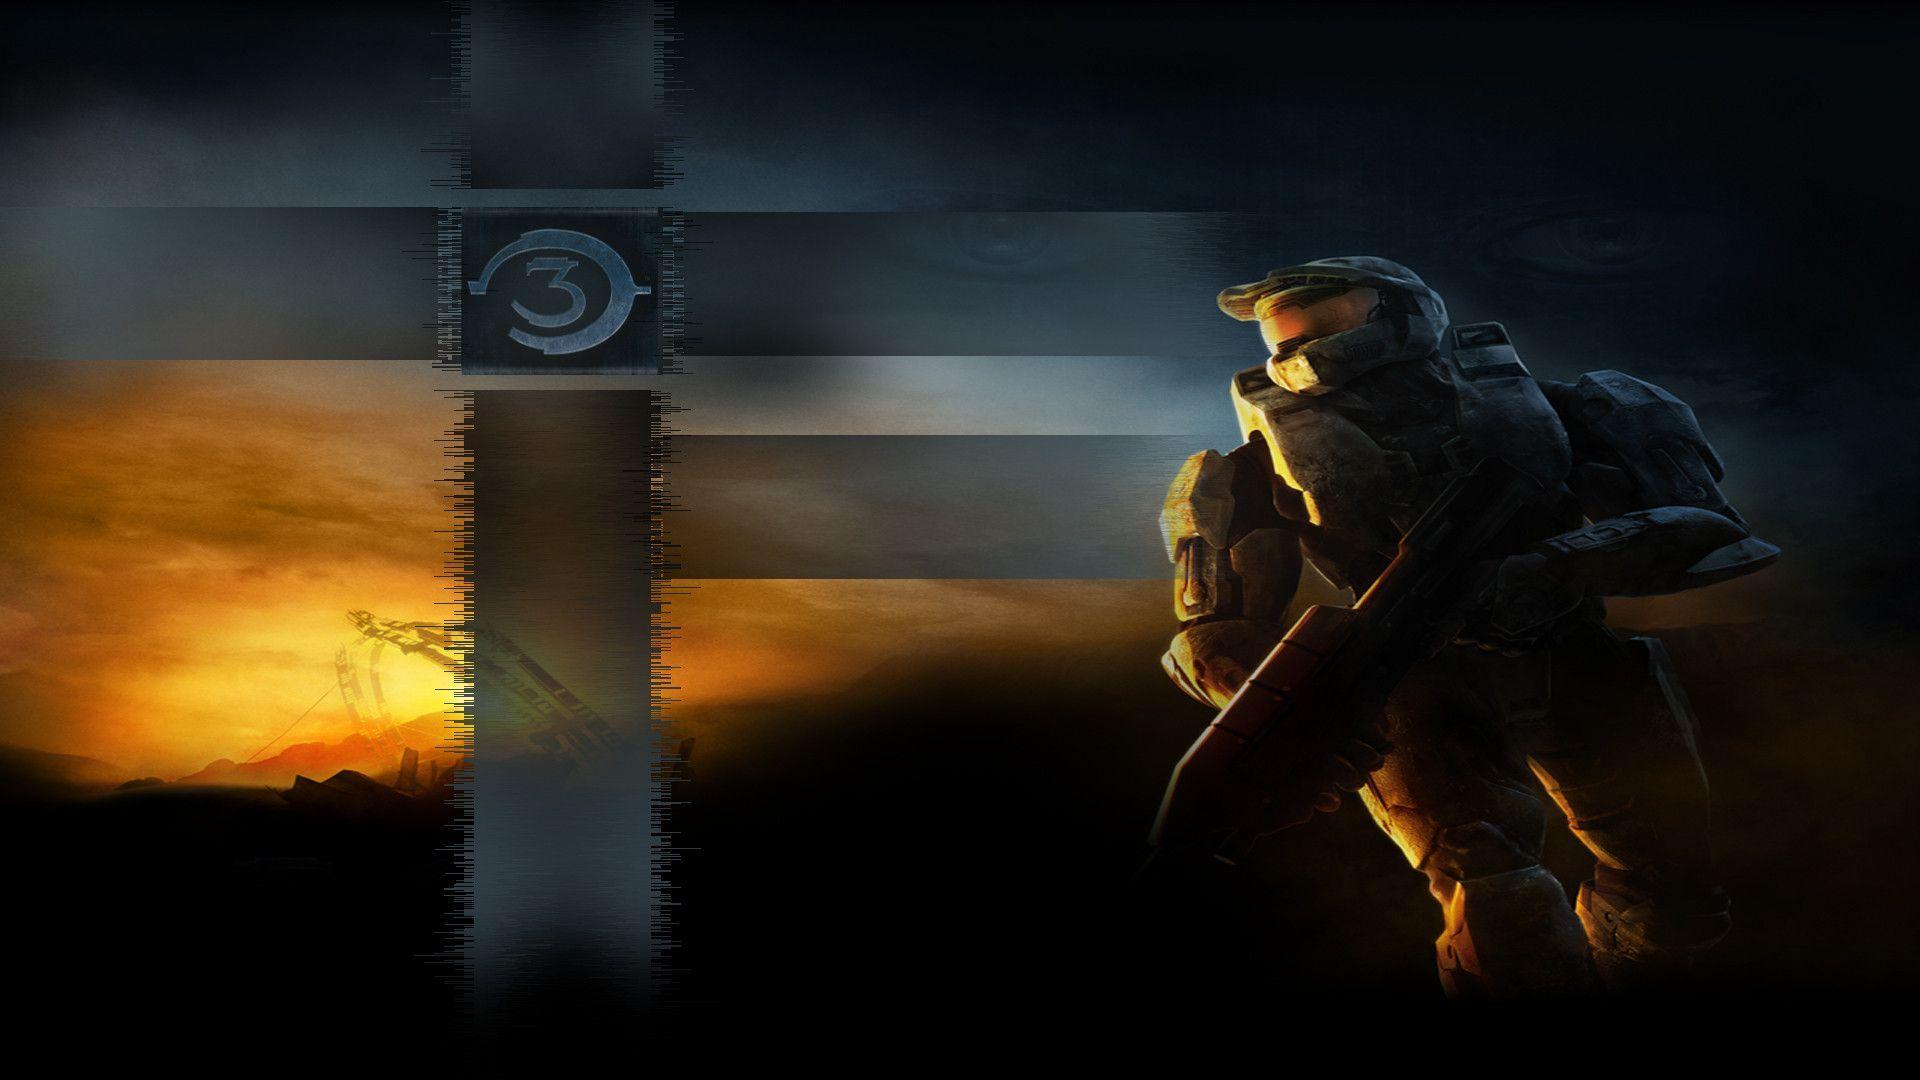 Ps3 Halo 3 Desktop Wallpaper « DotGames